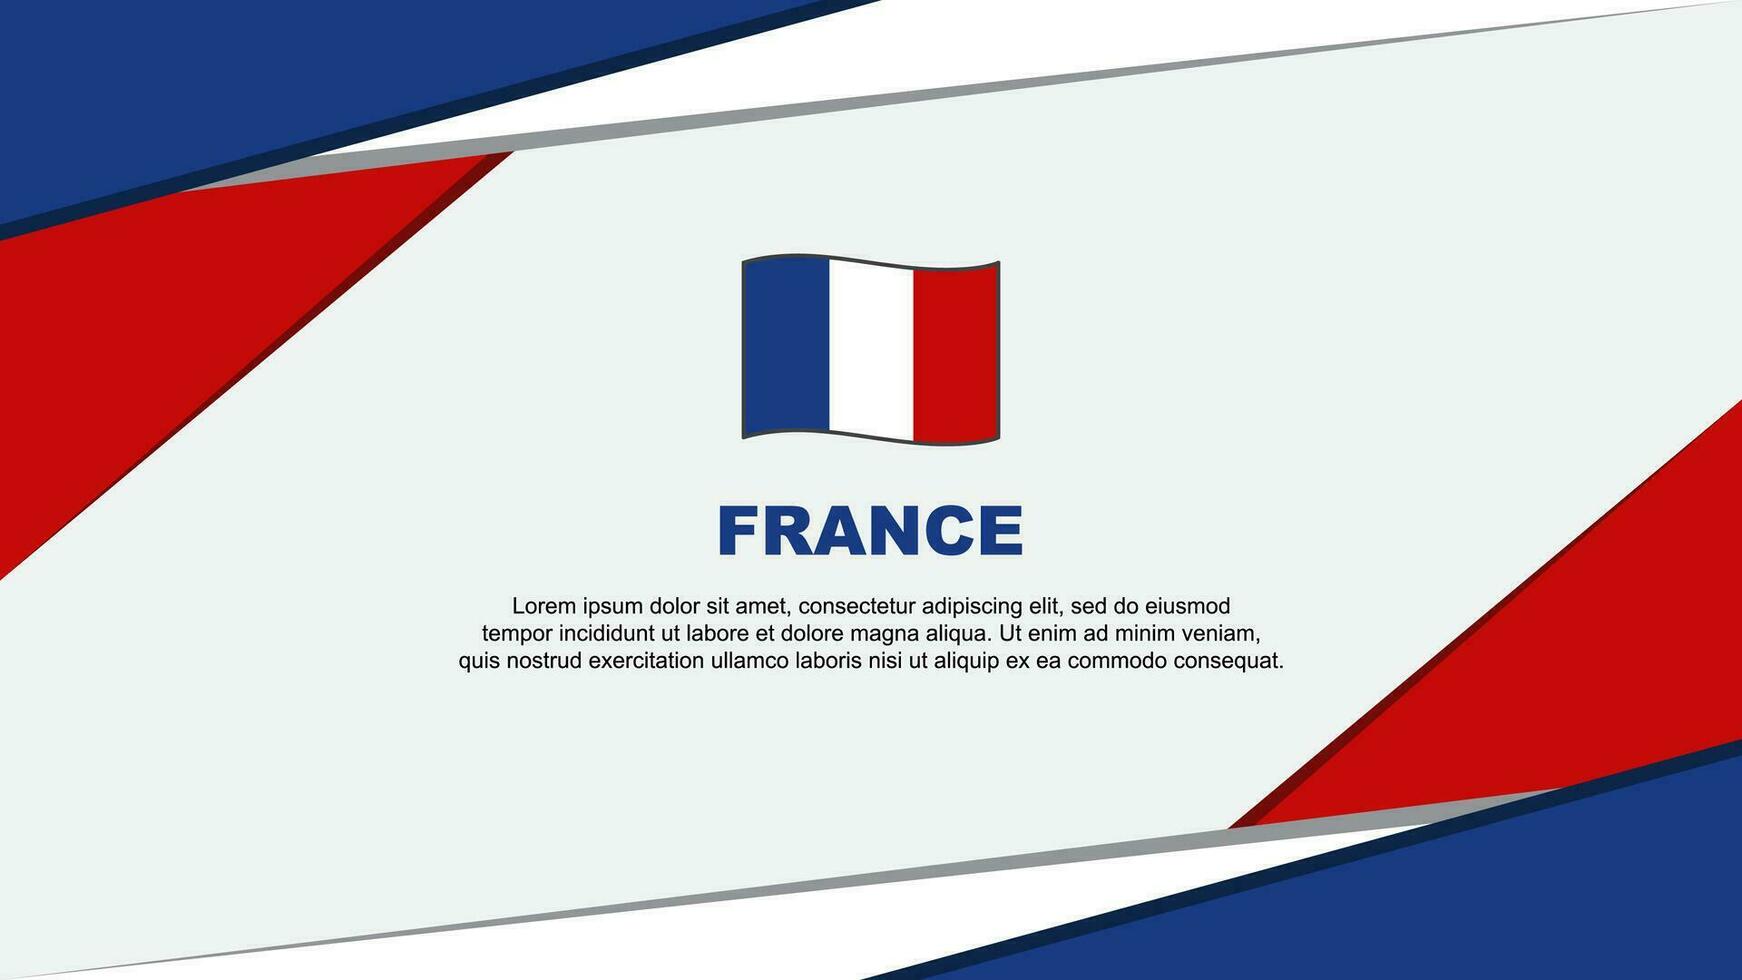 France Flag Abstract Background Design Template. France Independence Day Banner Cartoon Vector Illustration. France Design